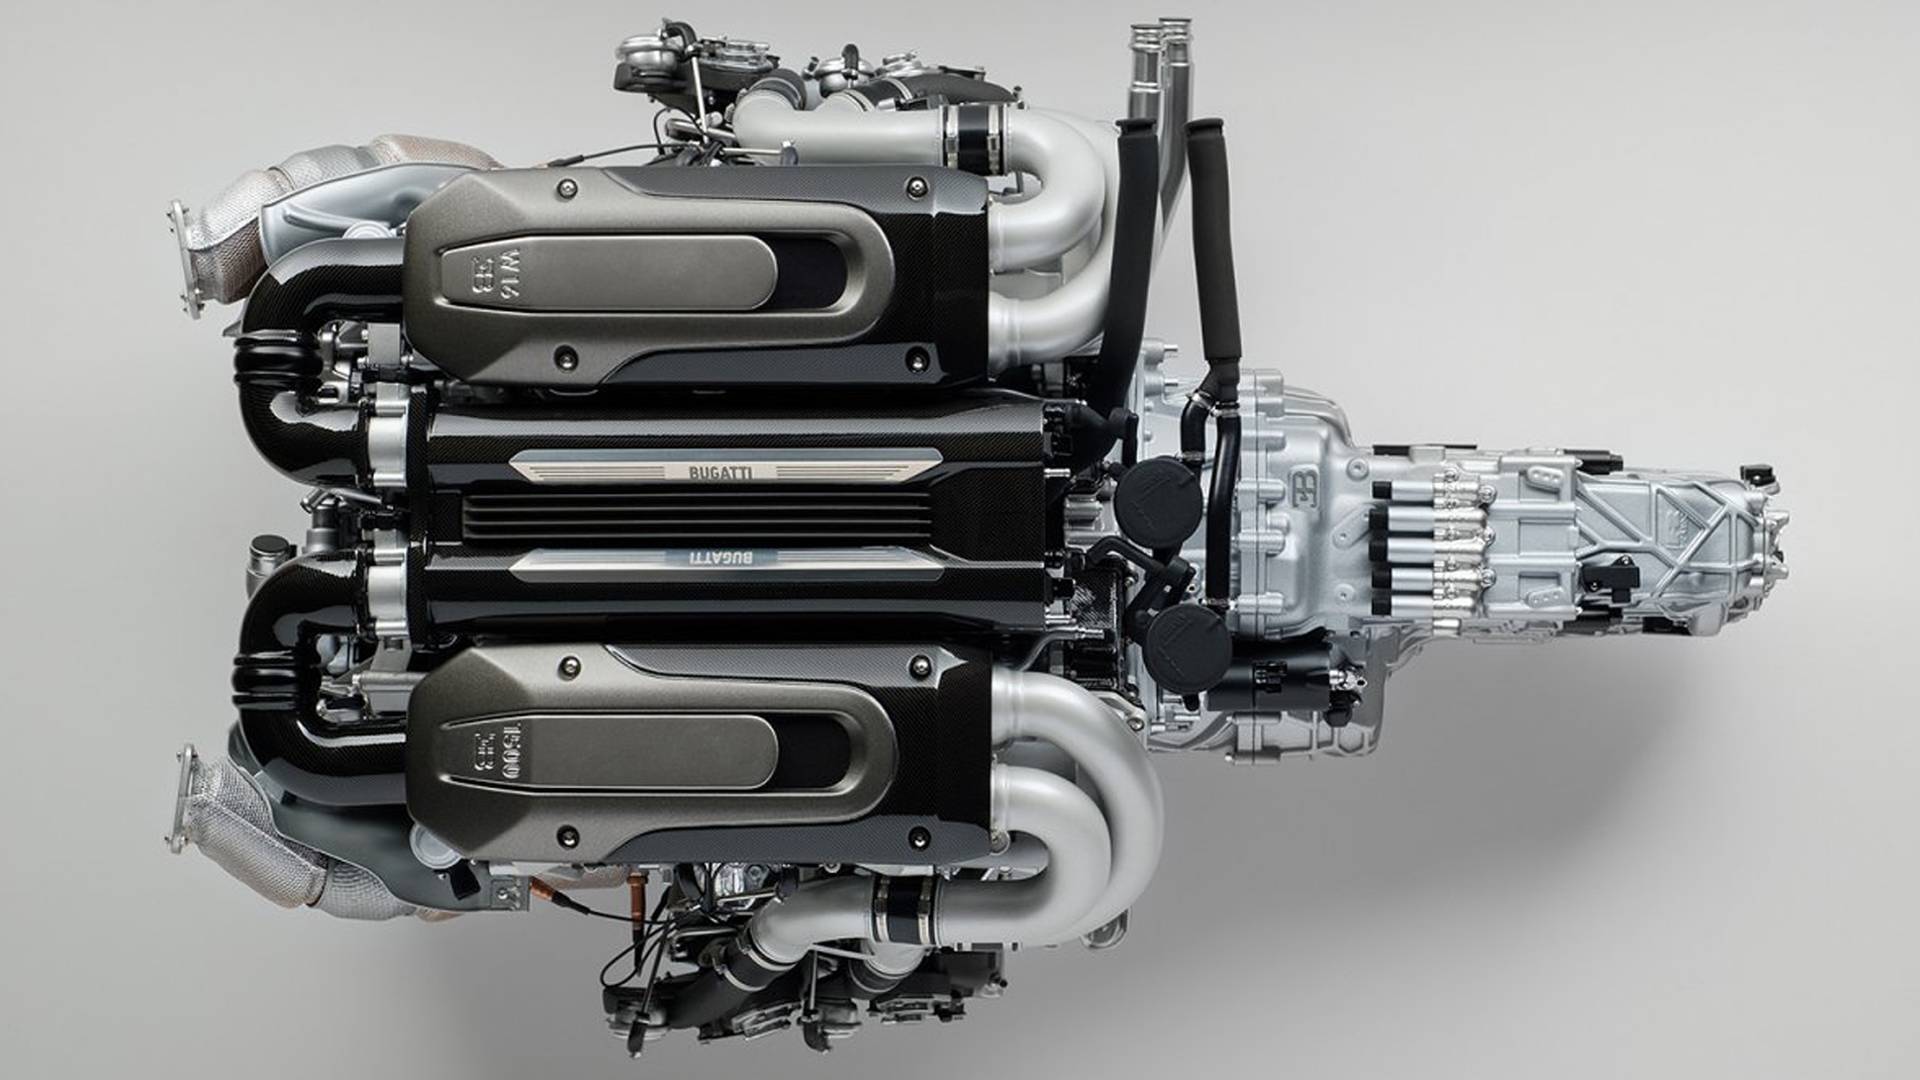 Bugatti hints W16 engine will get even more power